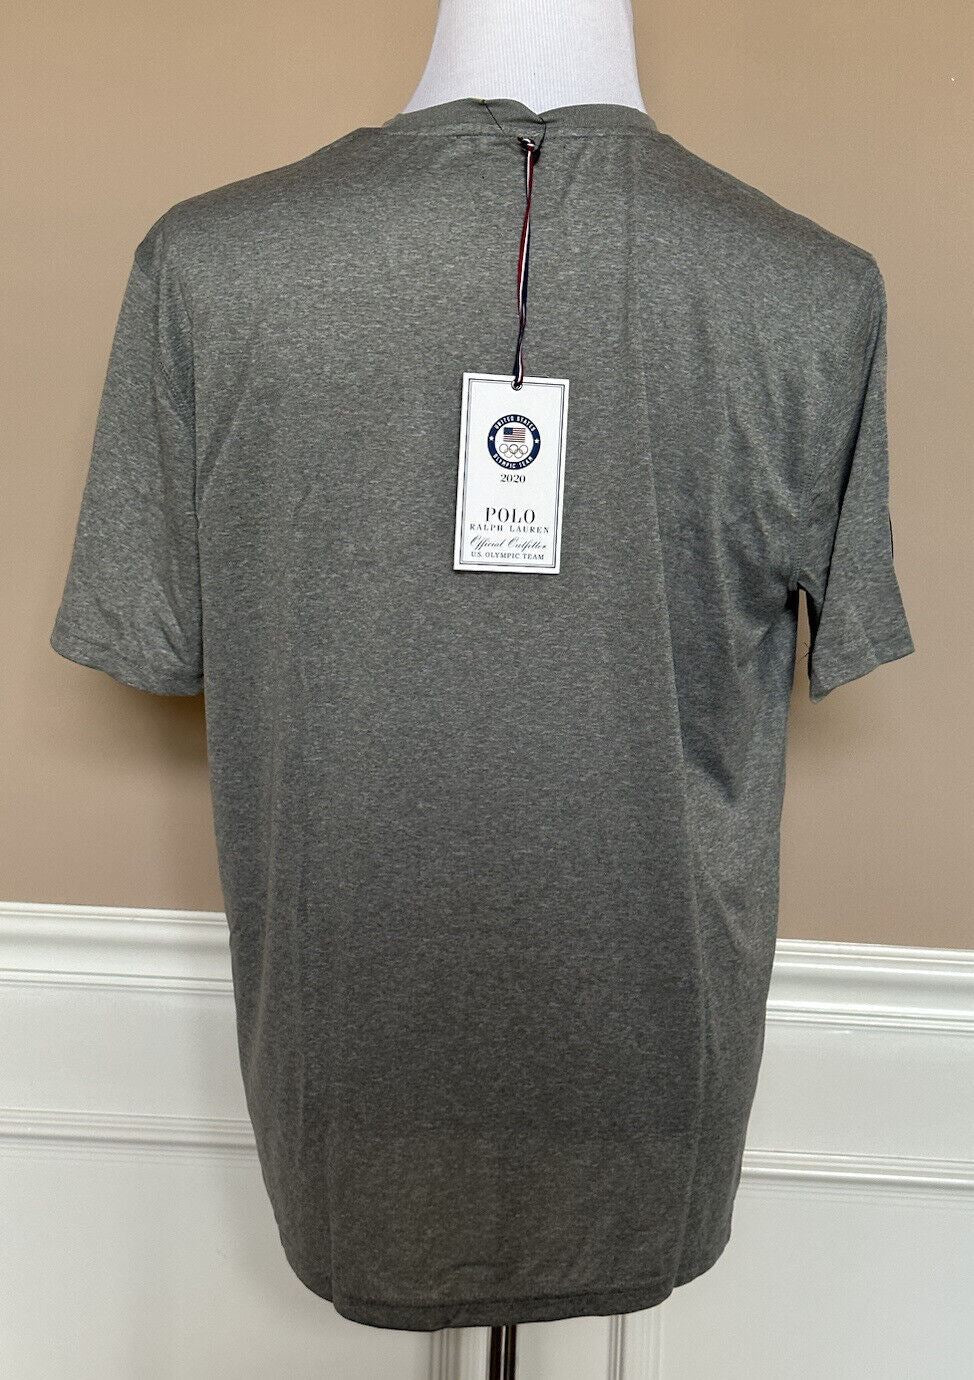 NWT $59.50 Polo Ralph Lauren USA Team Short Sleeve Stretch T-shirt Grey L